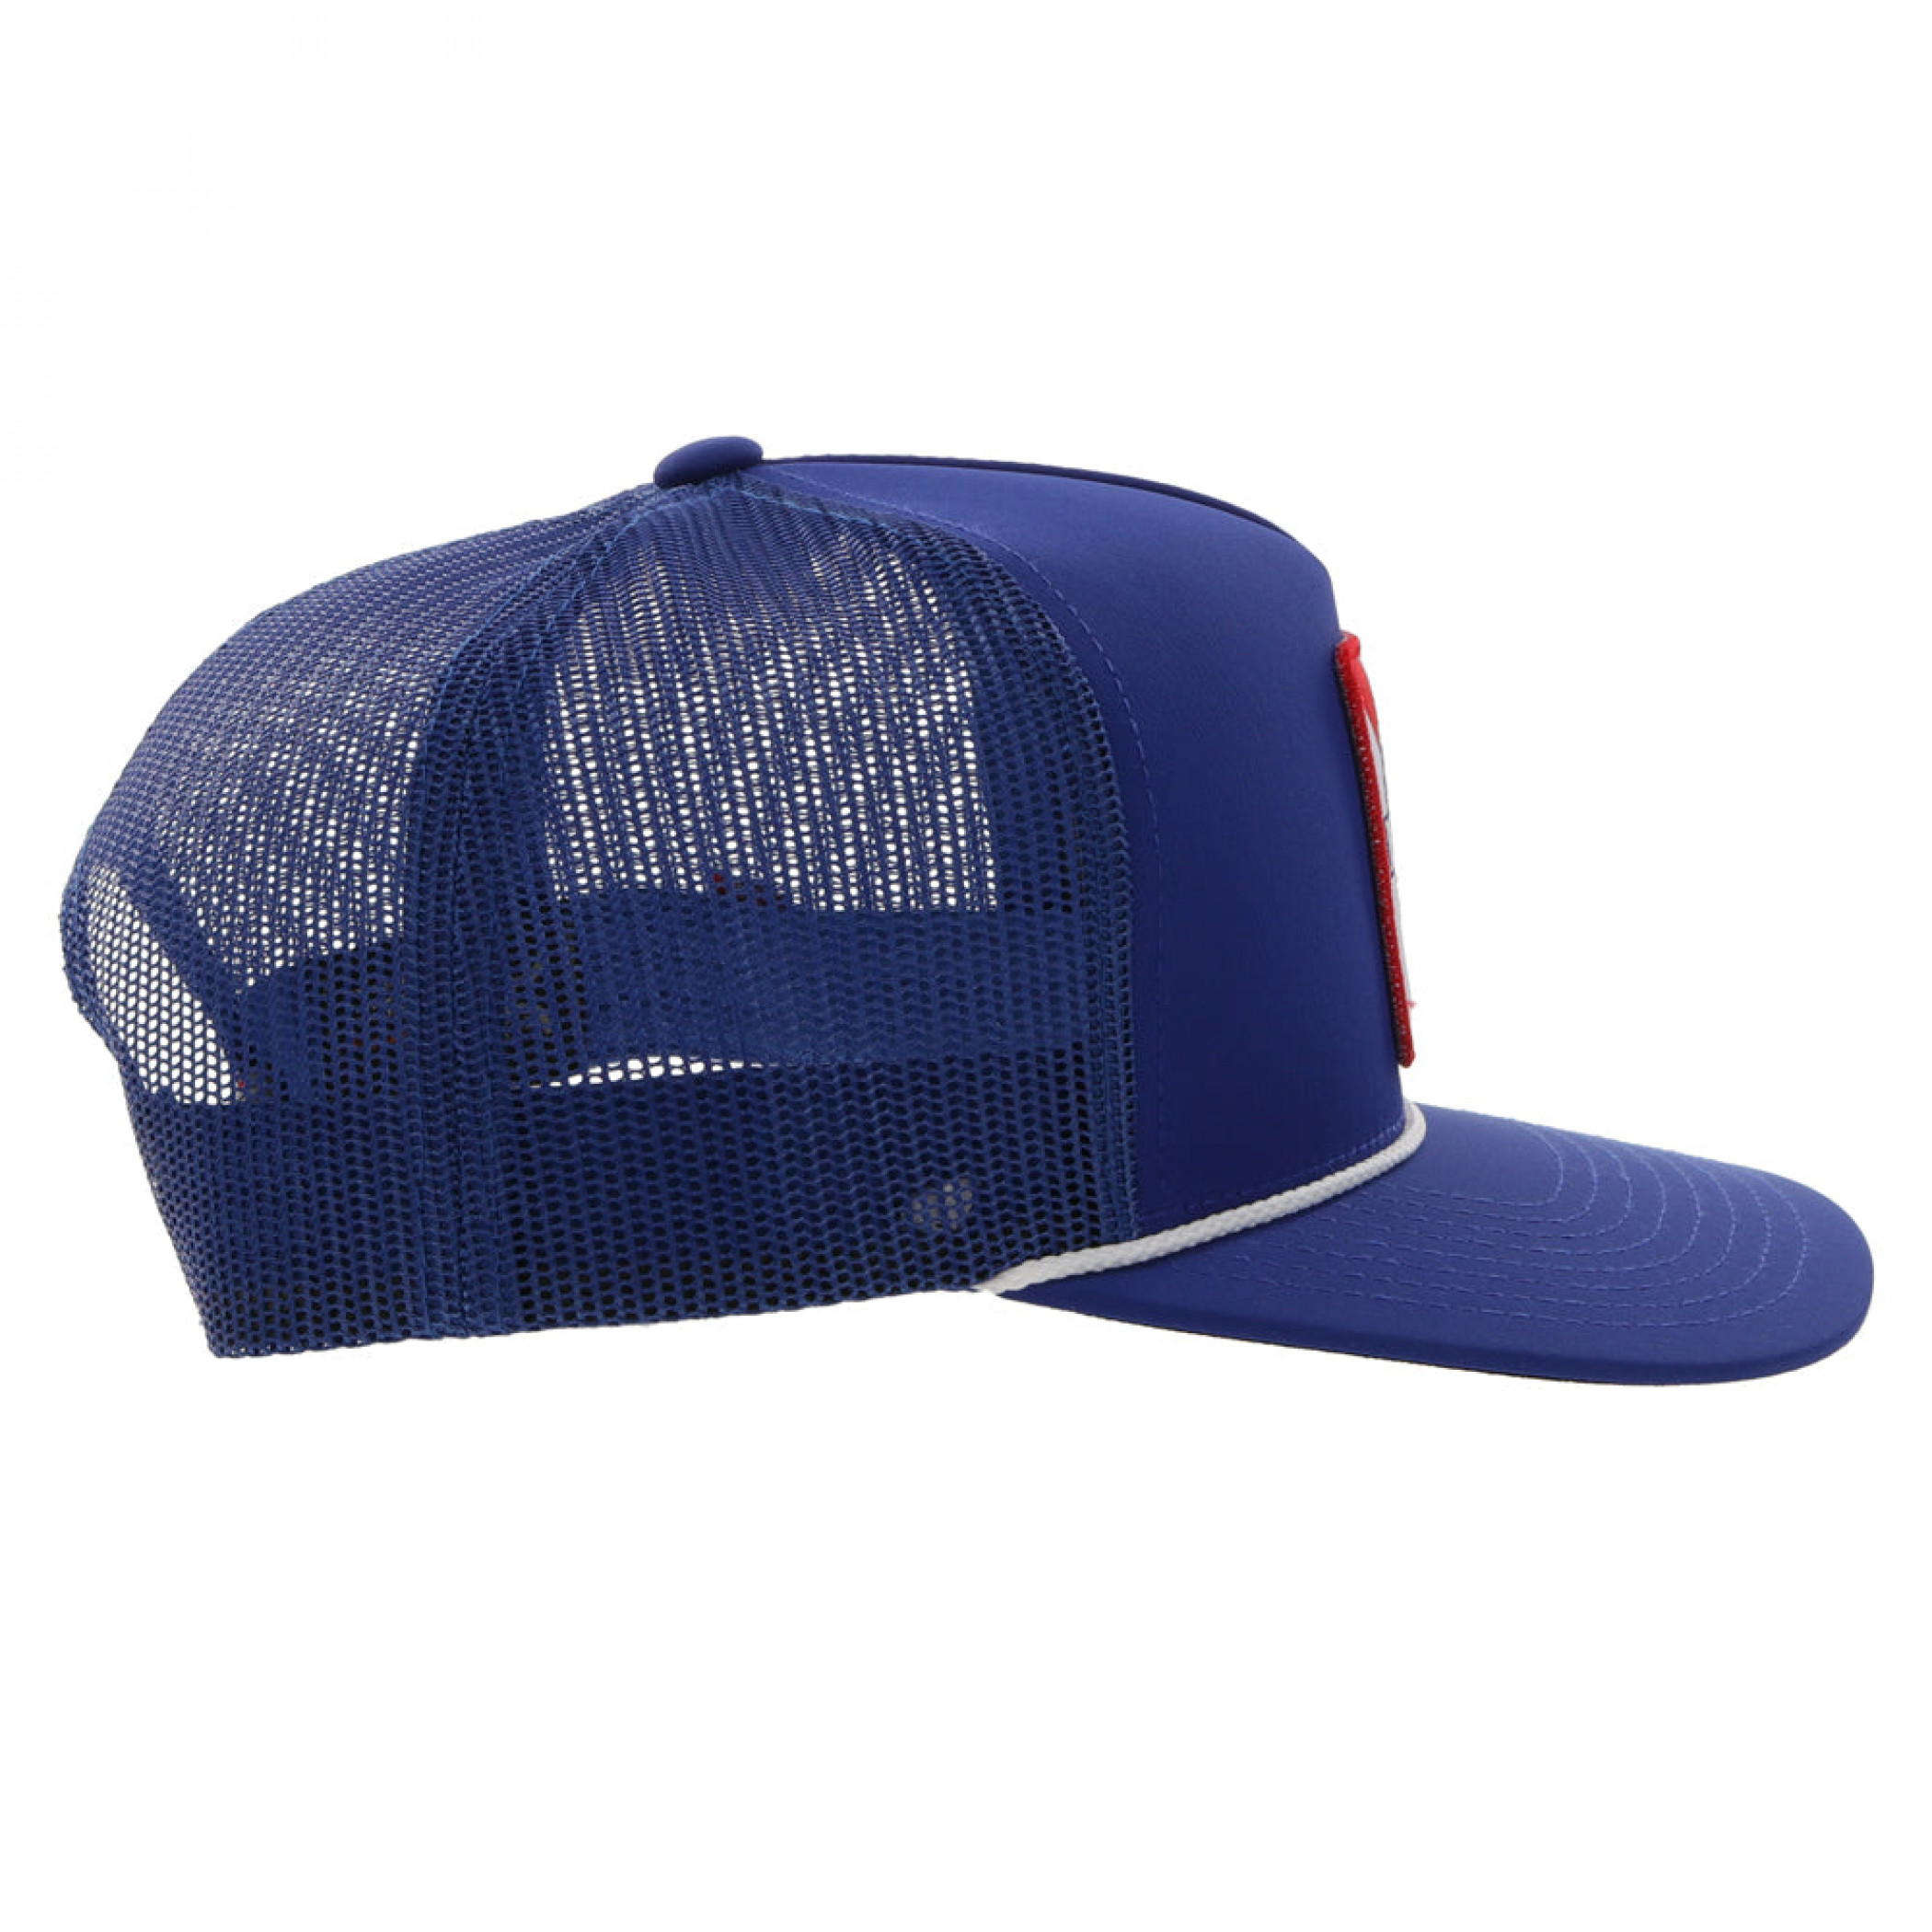 Pabst Blue Ribbon Embroidered Logo Snapback Hybrid Bill Trucker Hat